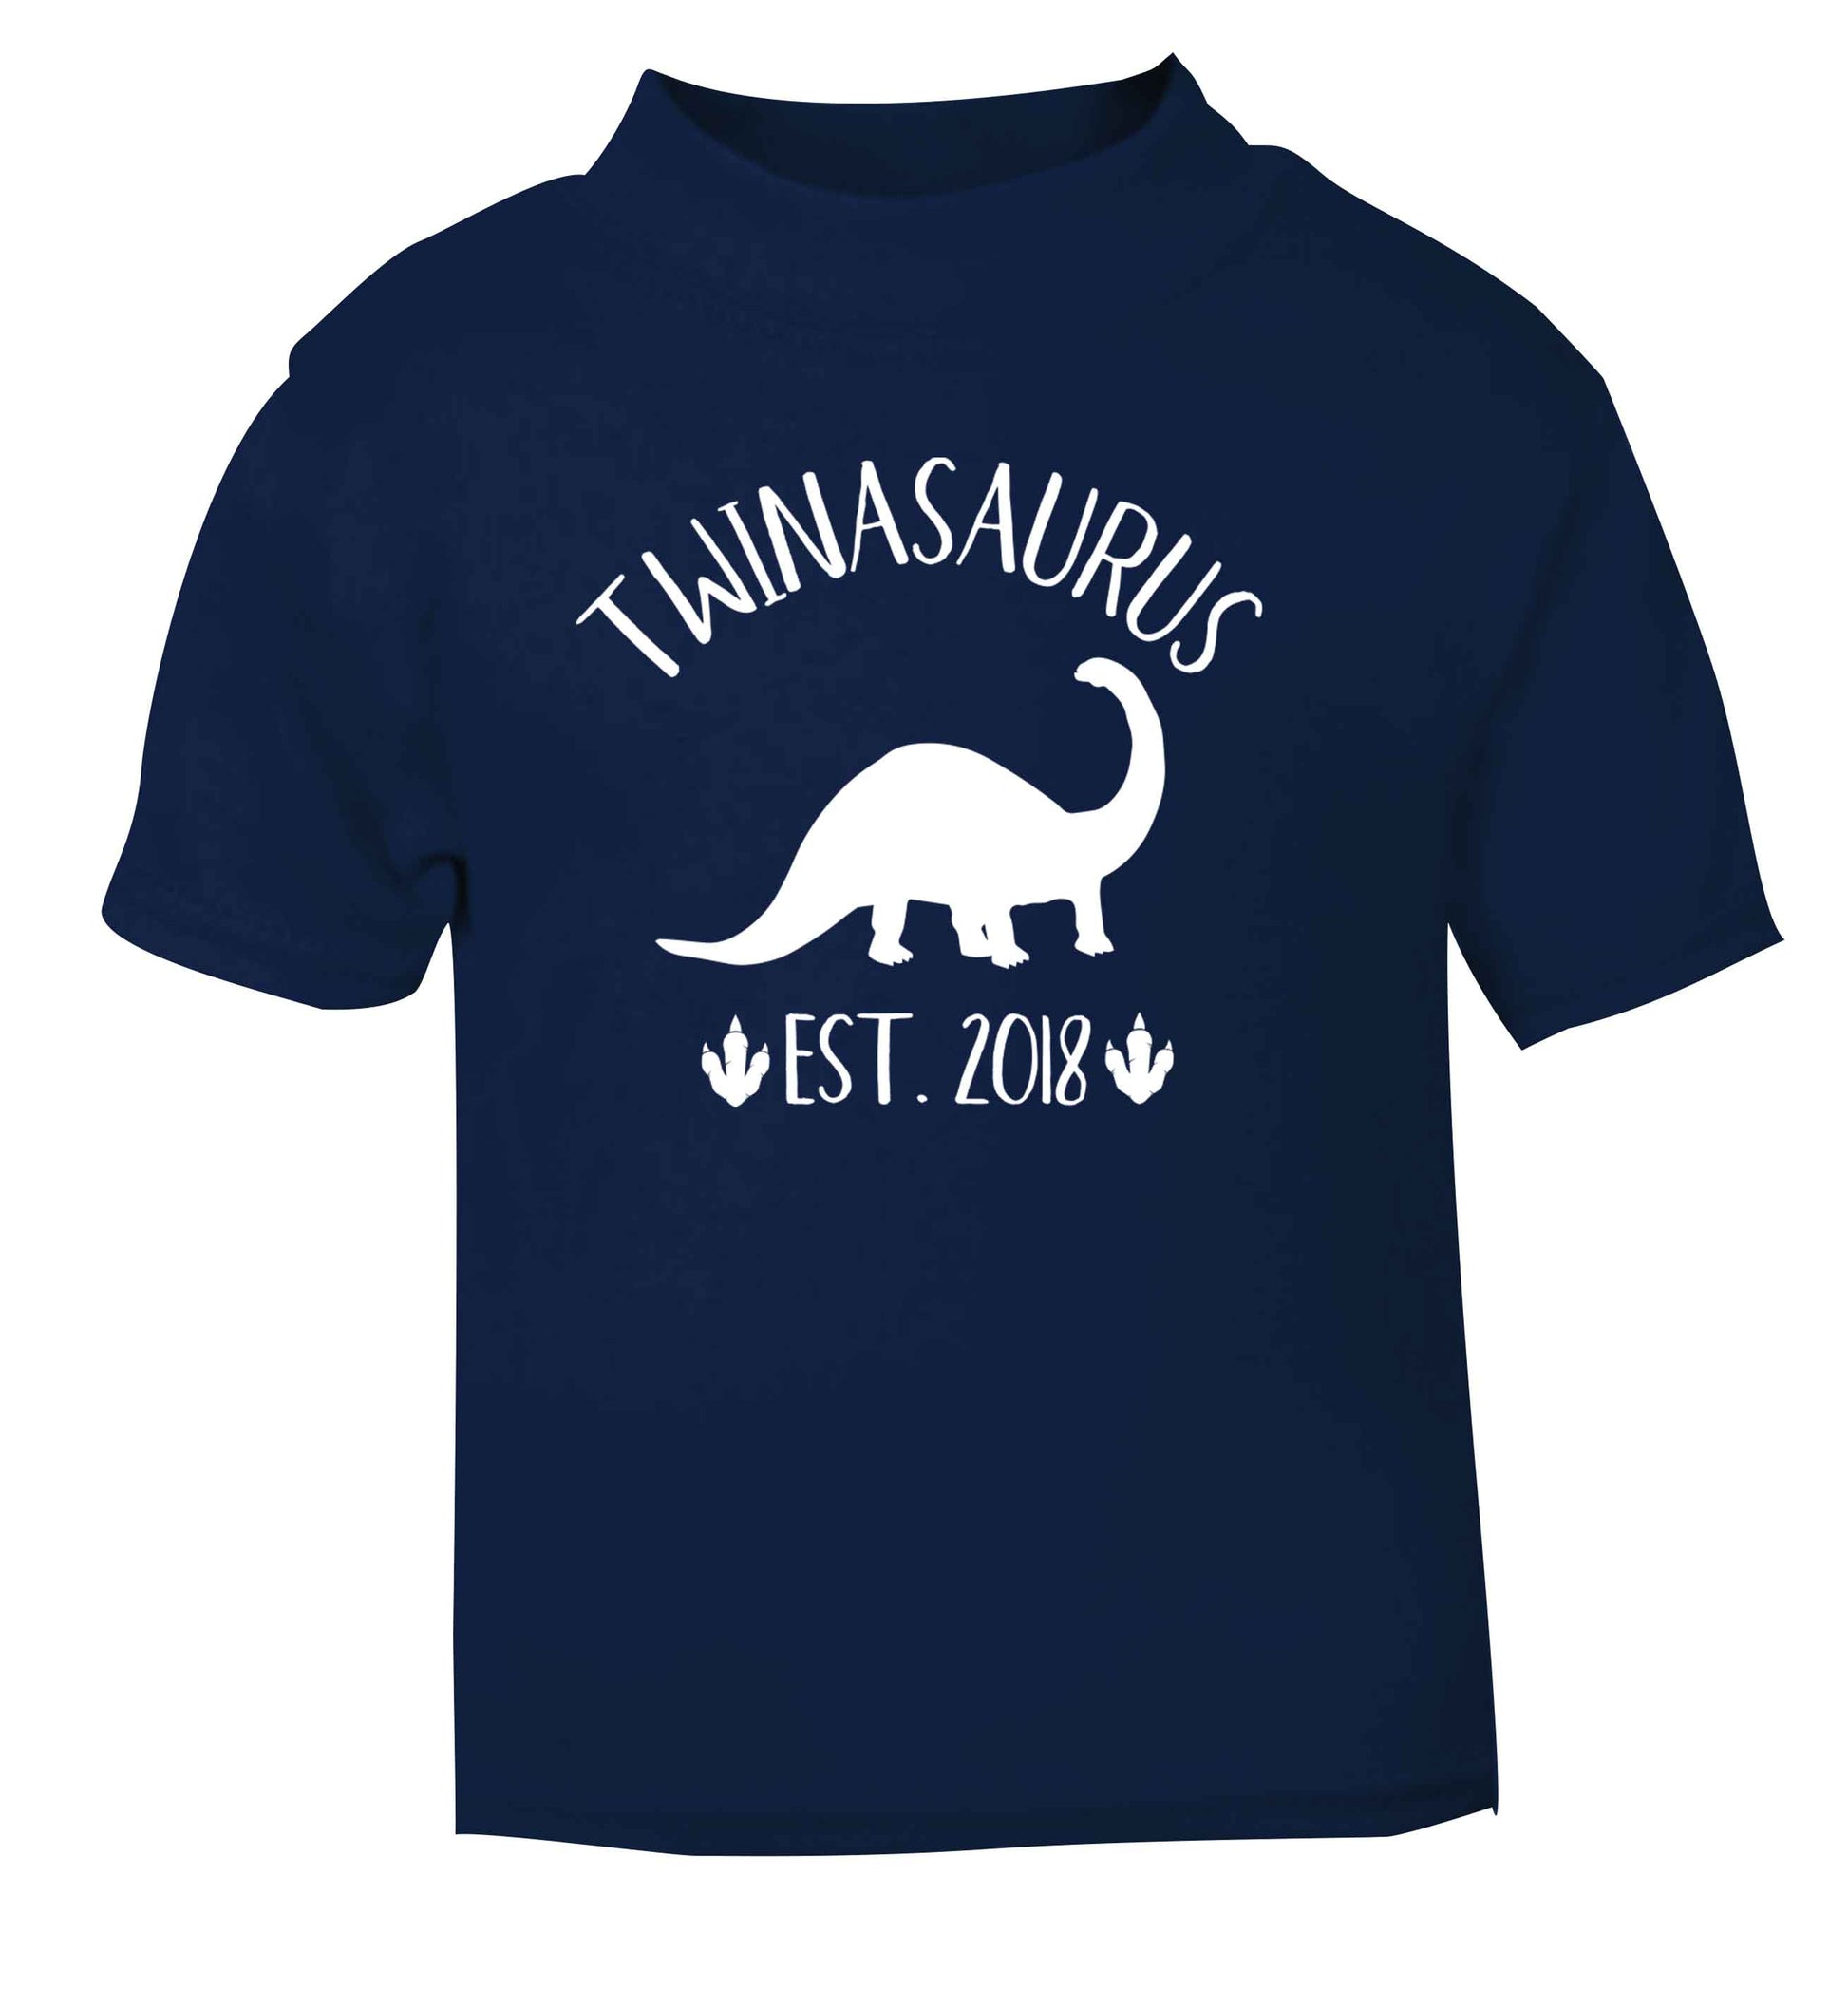 Personalised twinasaurus since (custom date) navy Baby Toddler Tshirt 2 Years